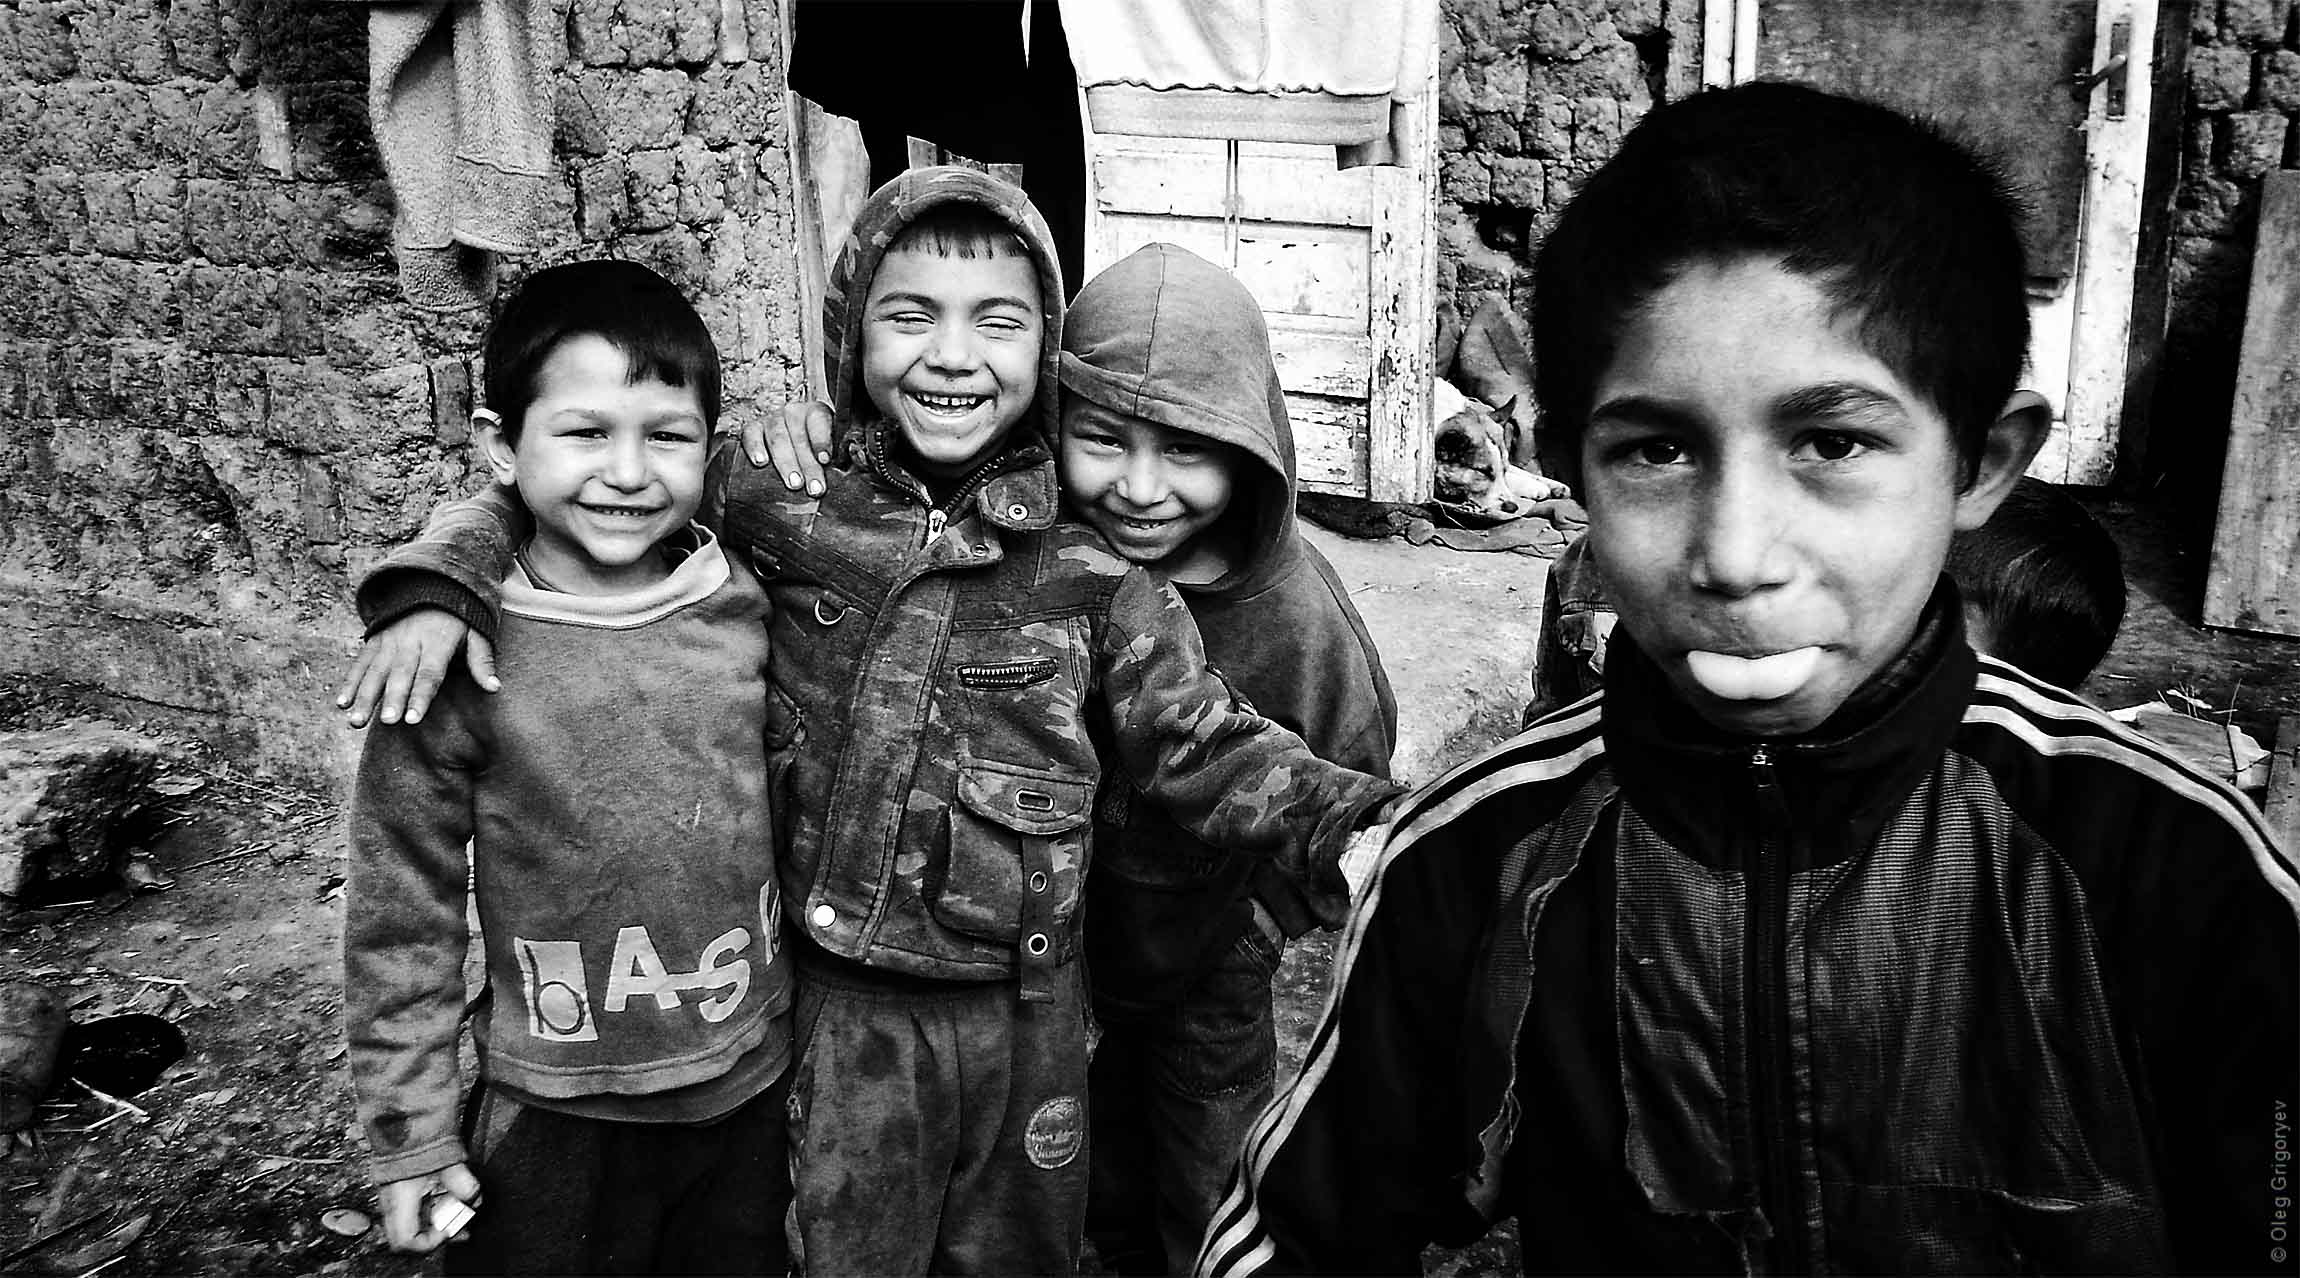 Gypsies Roma children